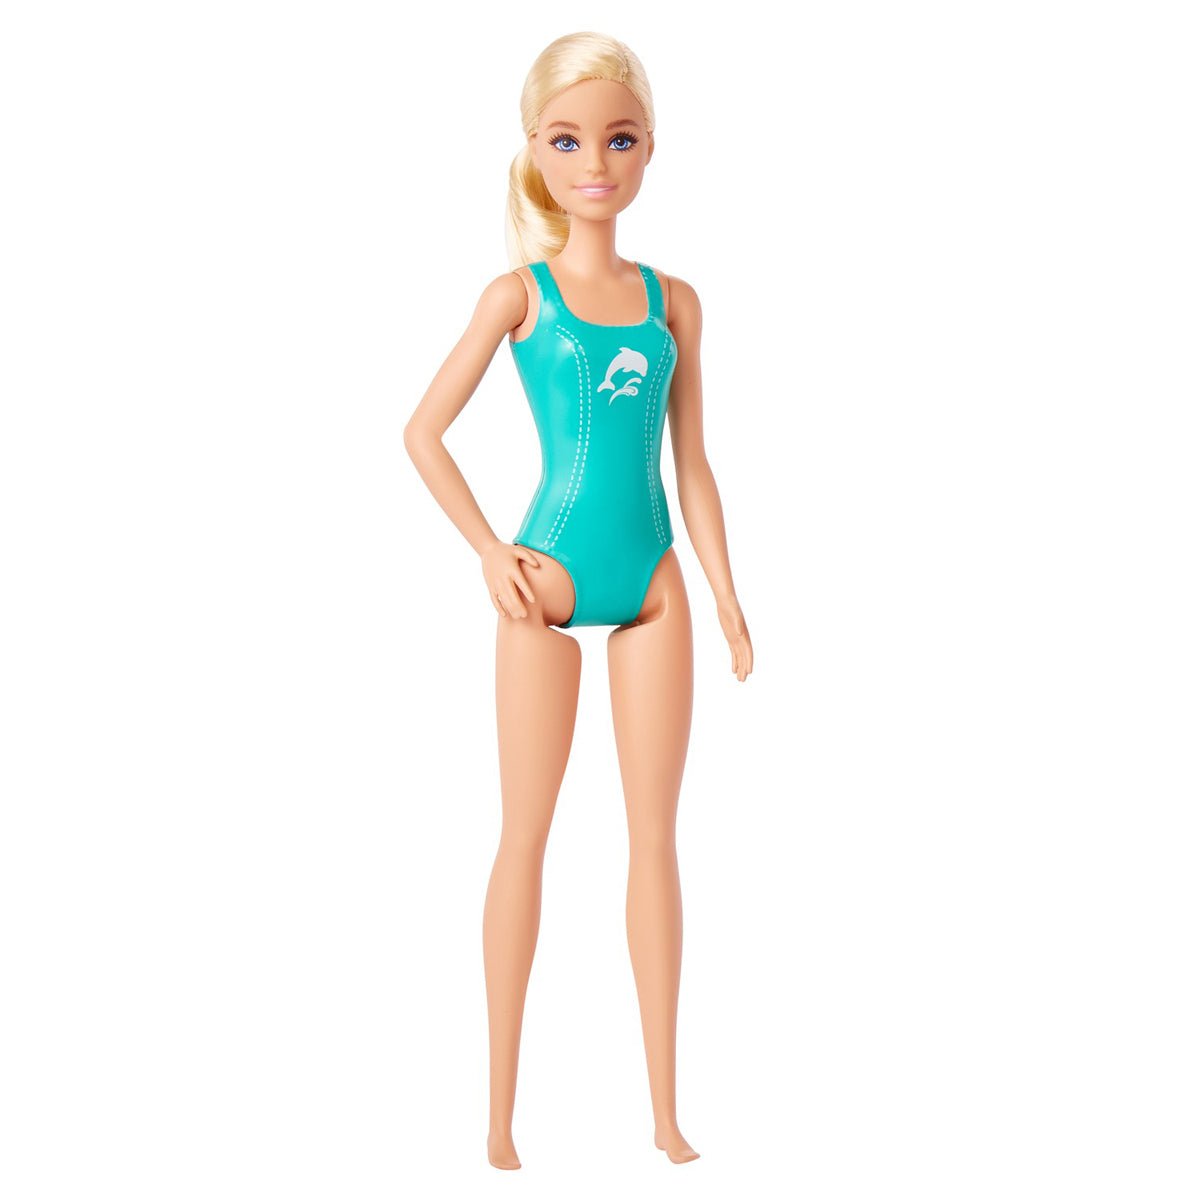 Barbie Marine Biologist Doll Playset